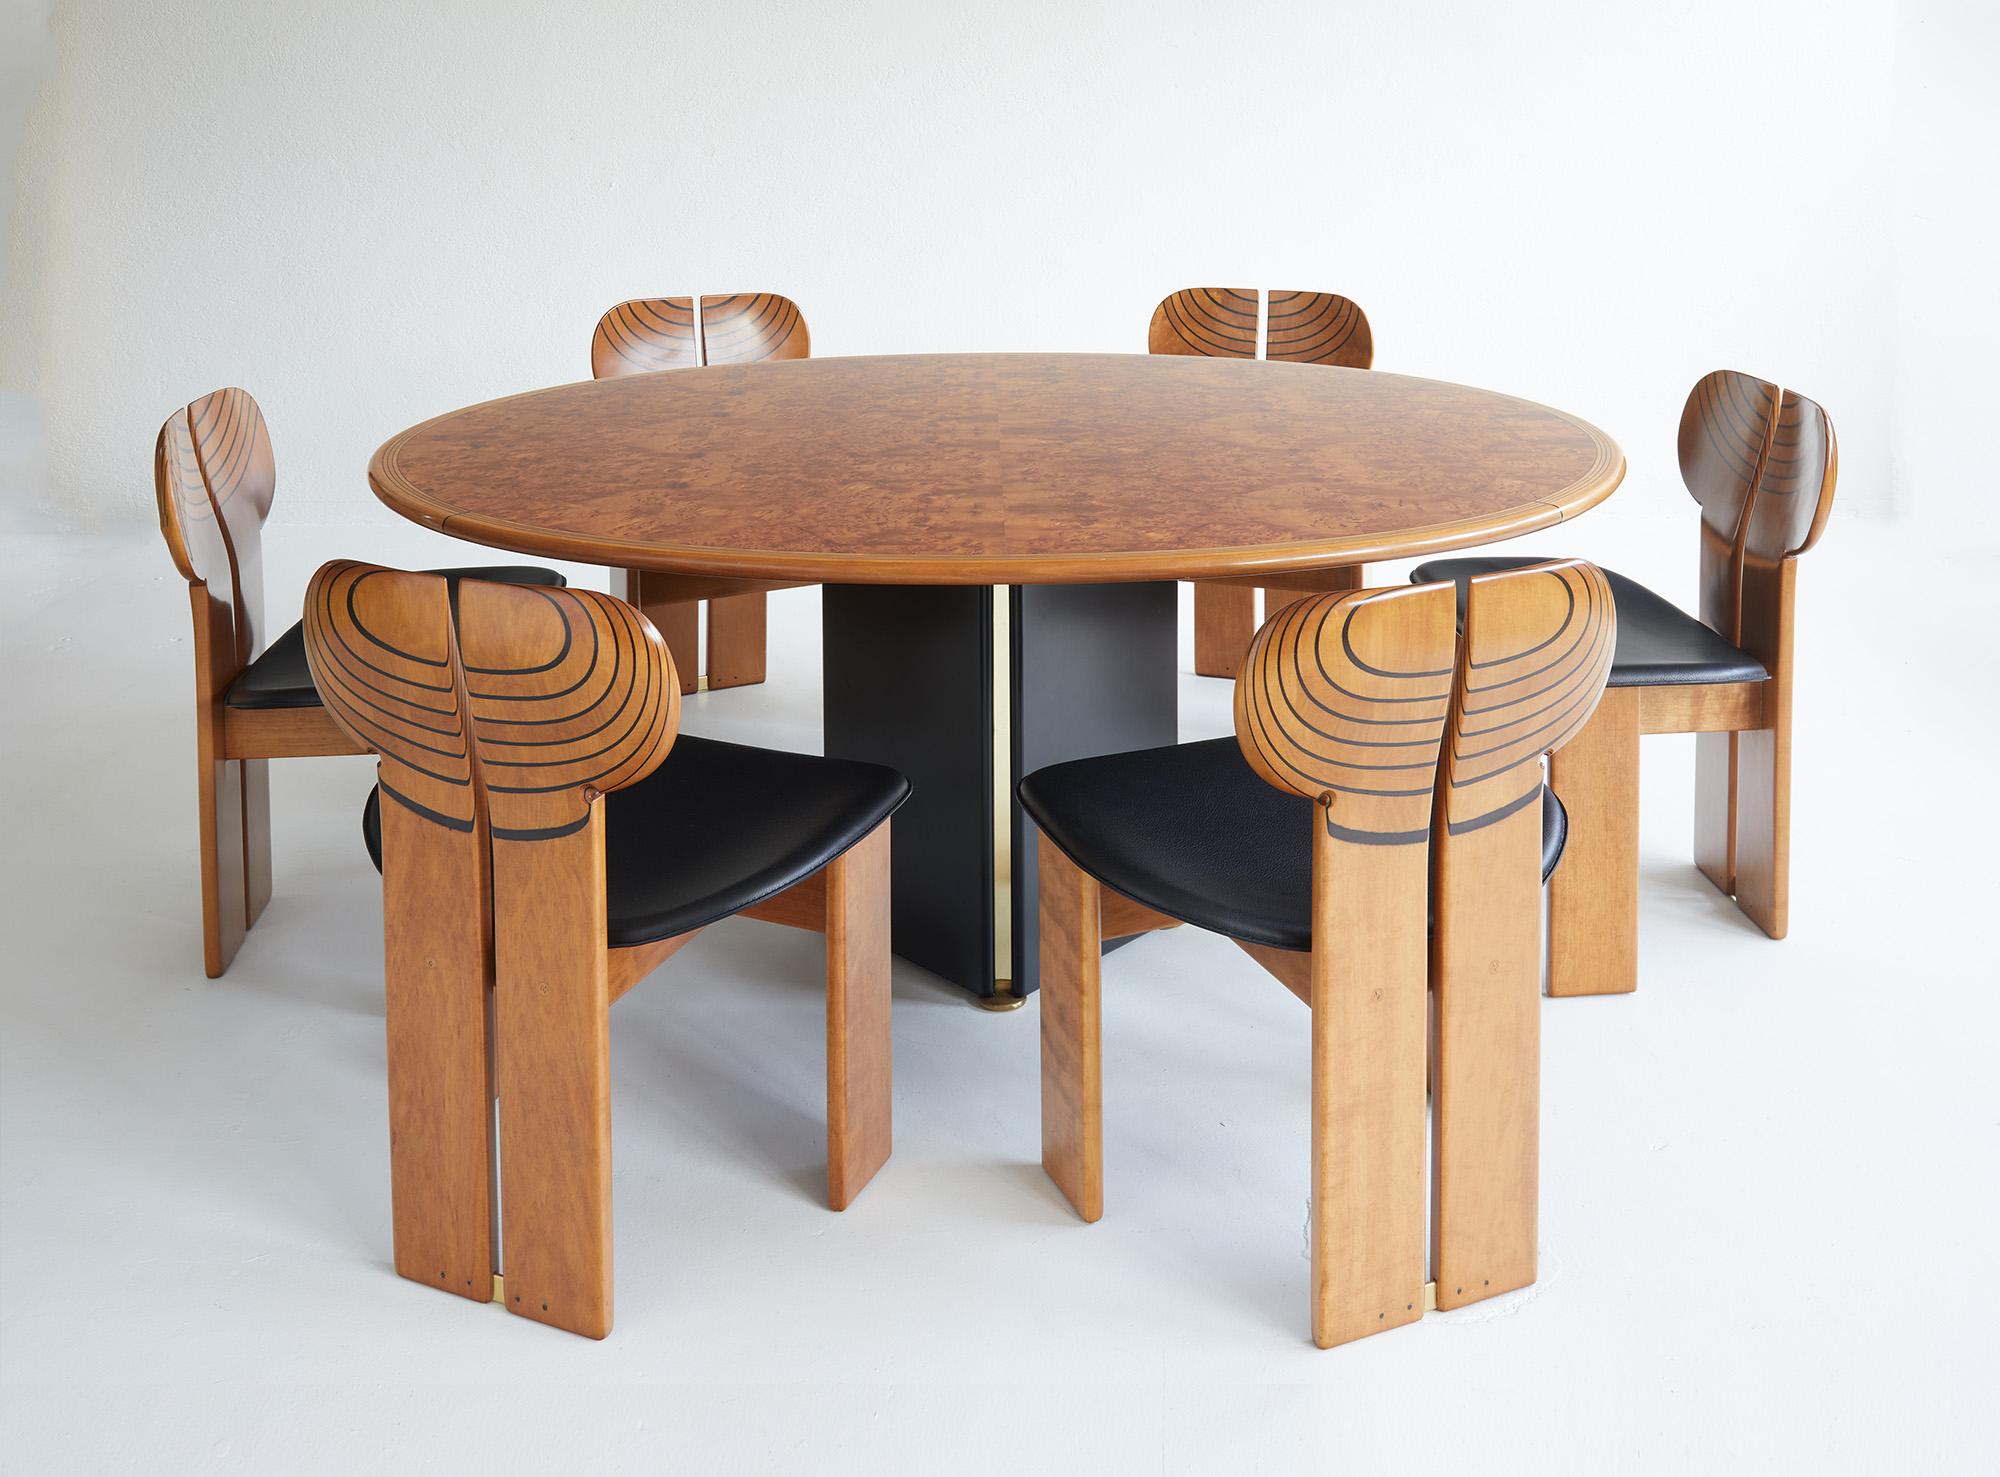 Artona oval dining table by Afra and Tobia Scarpa, ed. Maxalto 1975 For Sale 1